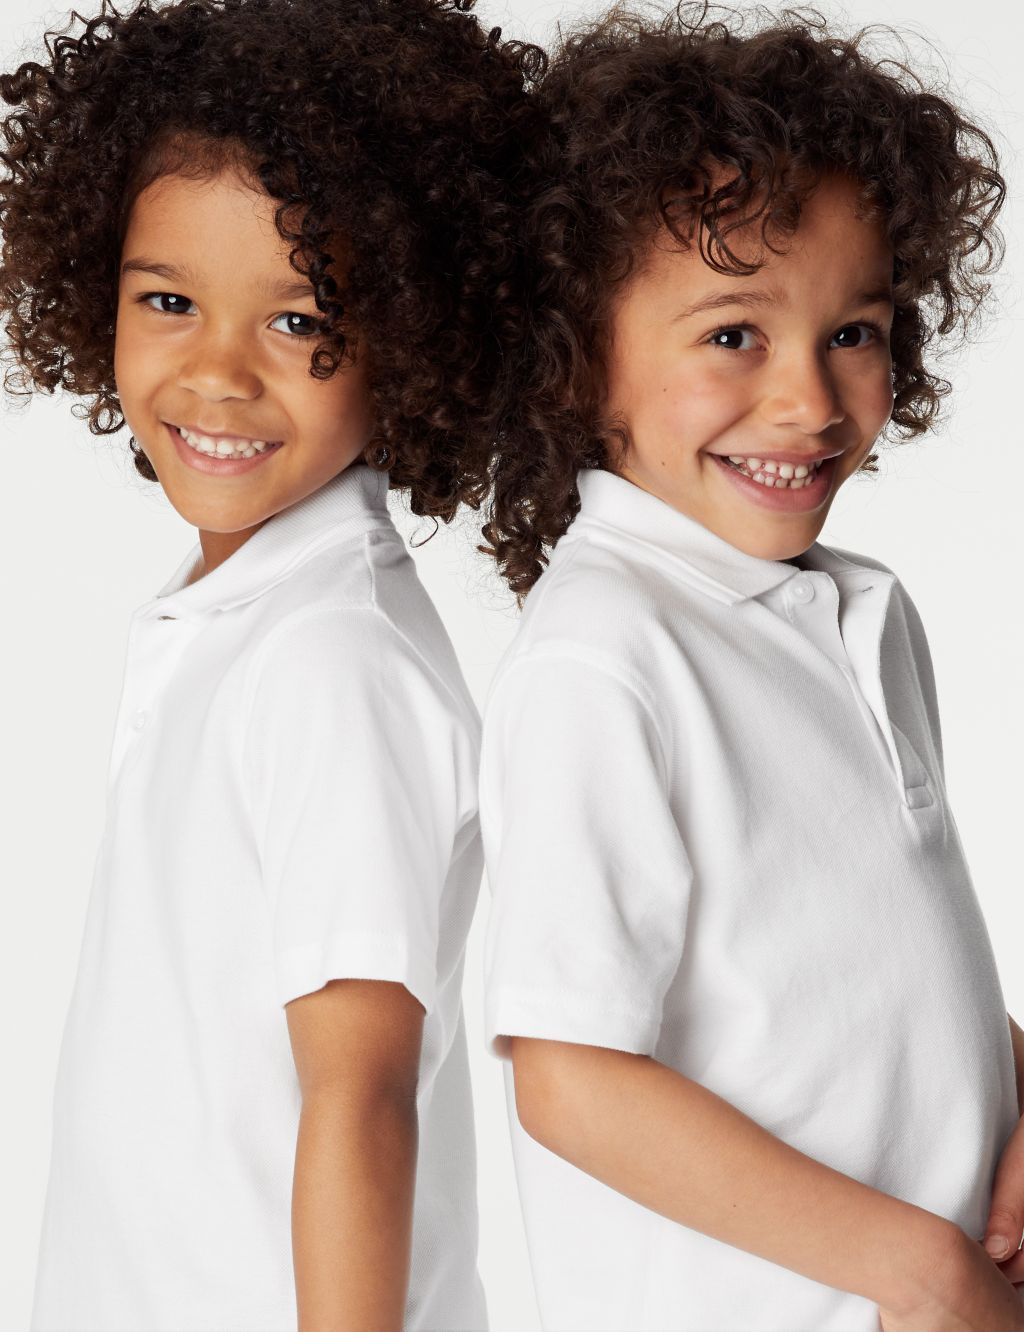 3pk Unisex Pure Cotton School Polo Shirts (2-16 Yrs) image 3